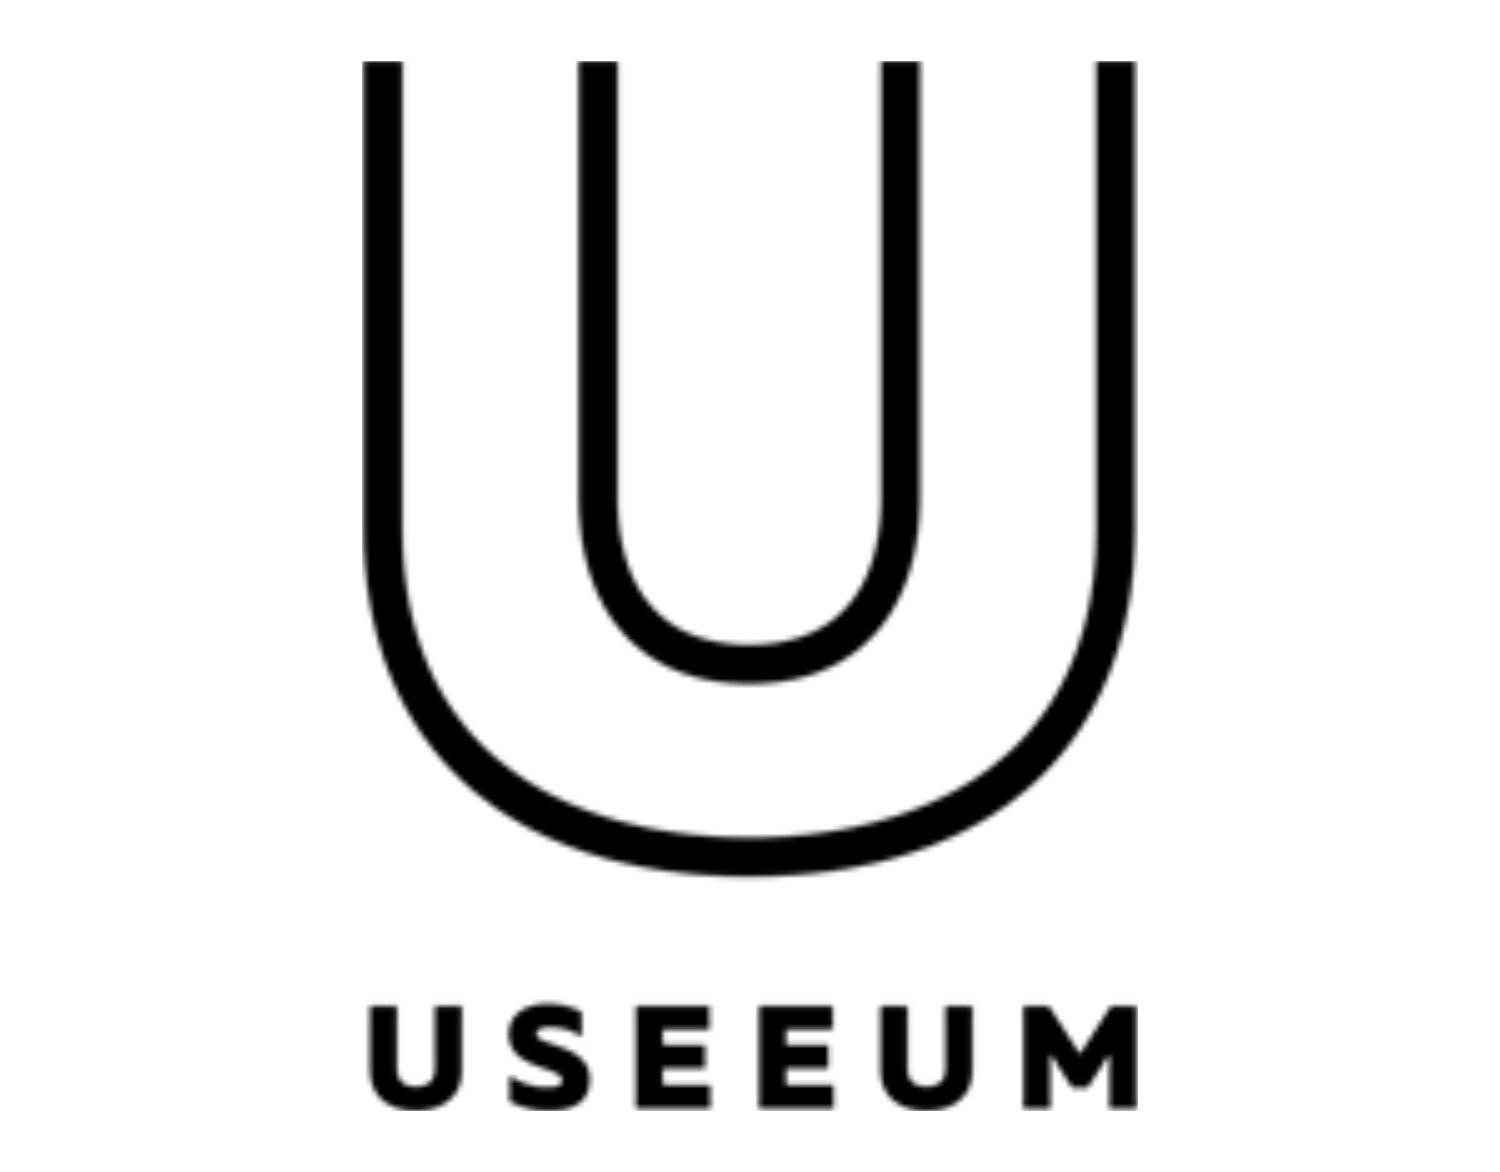 Useeum